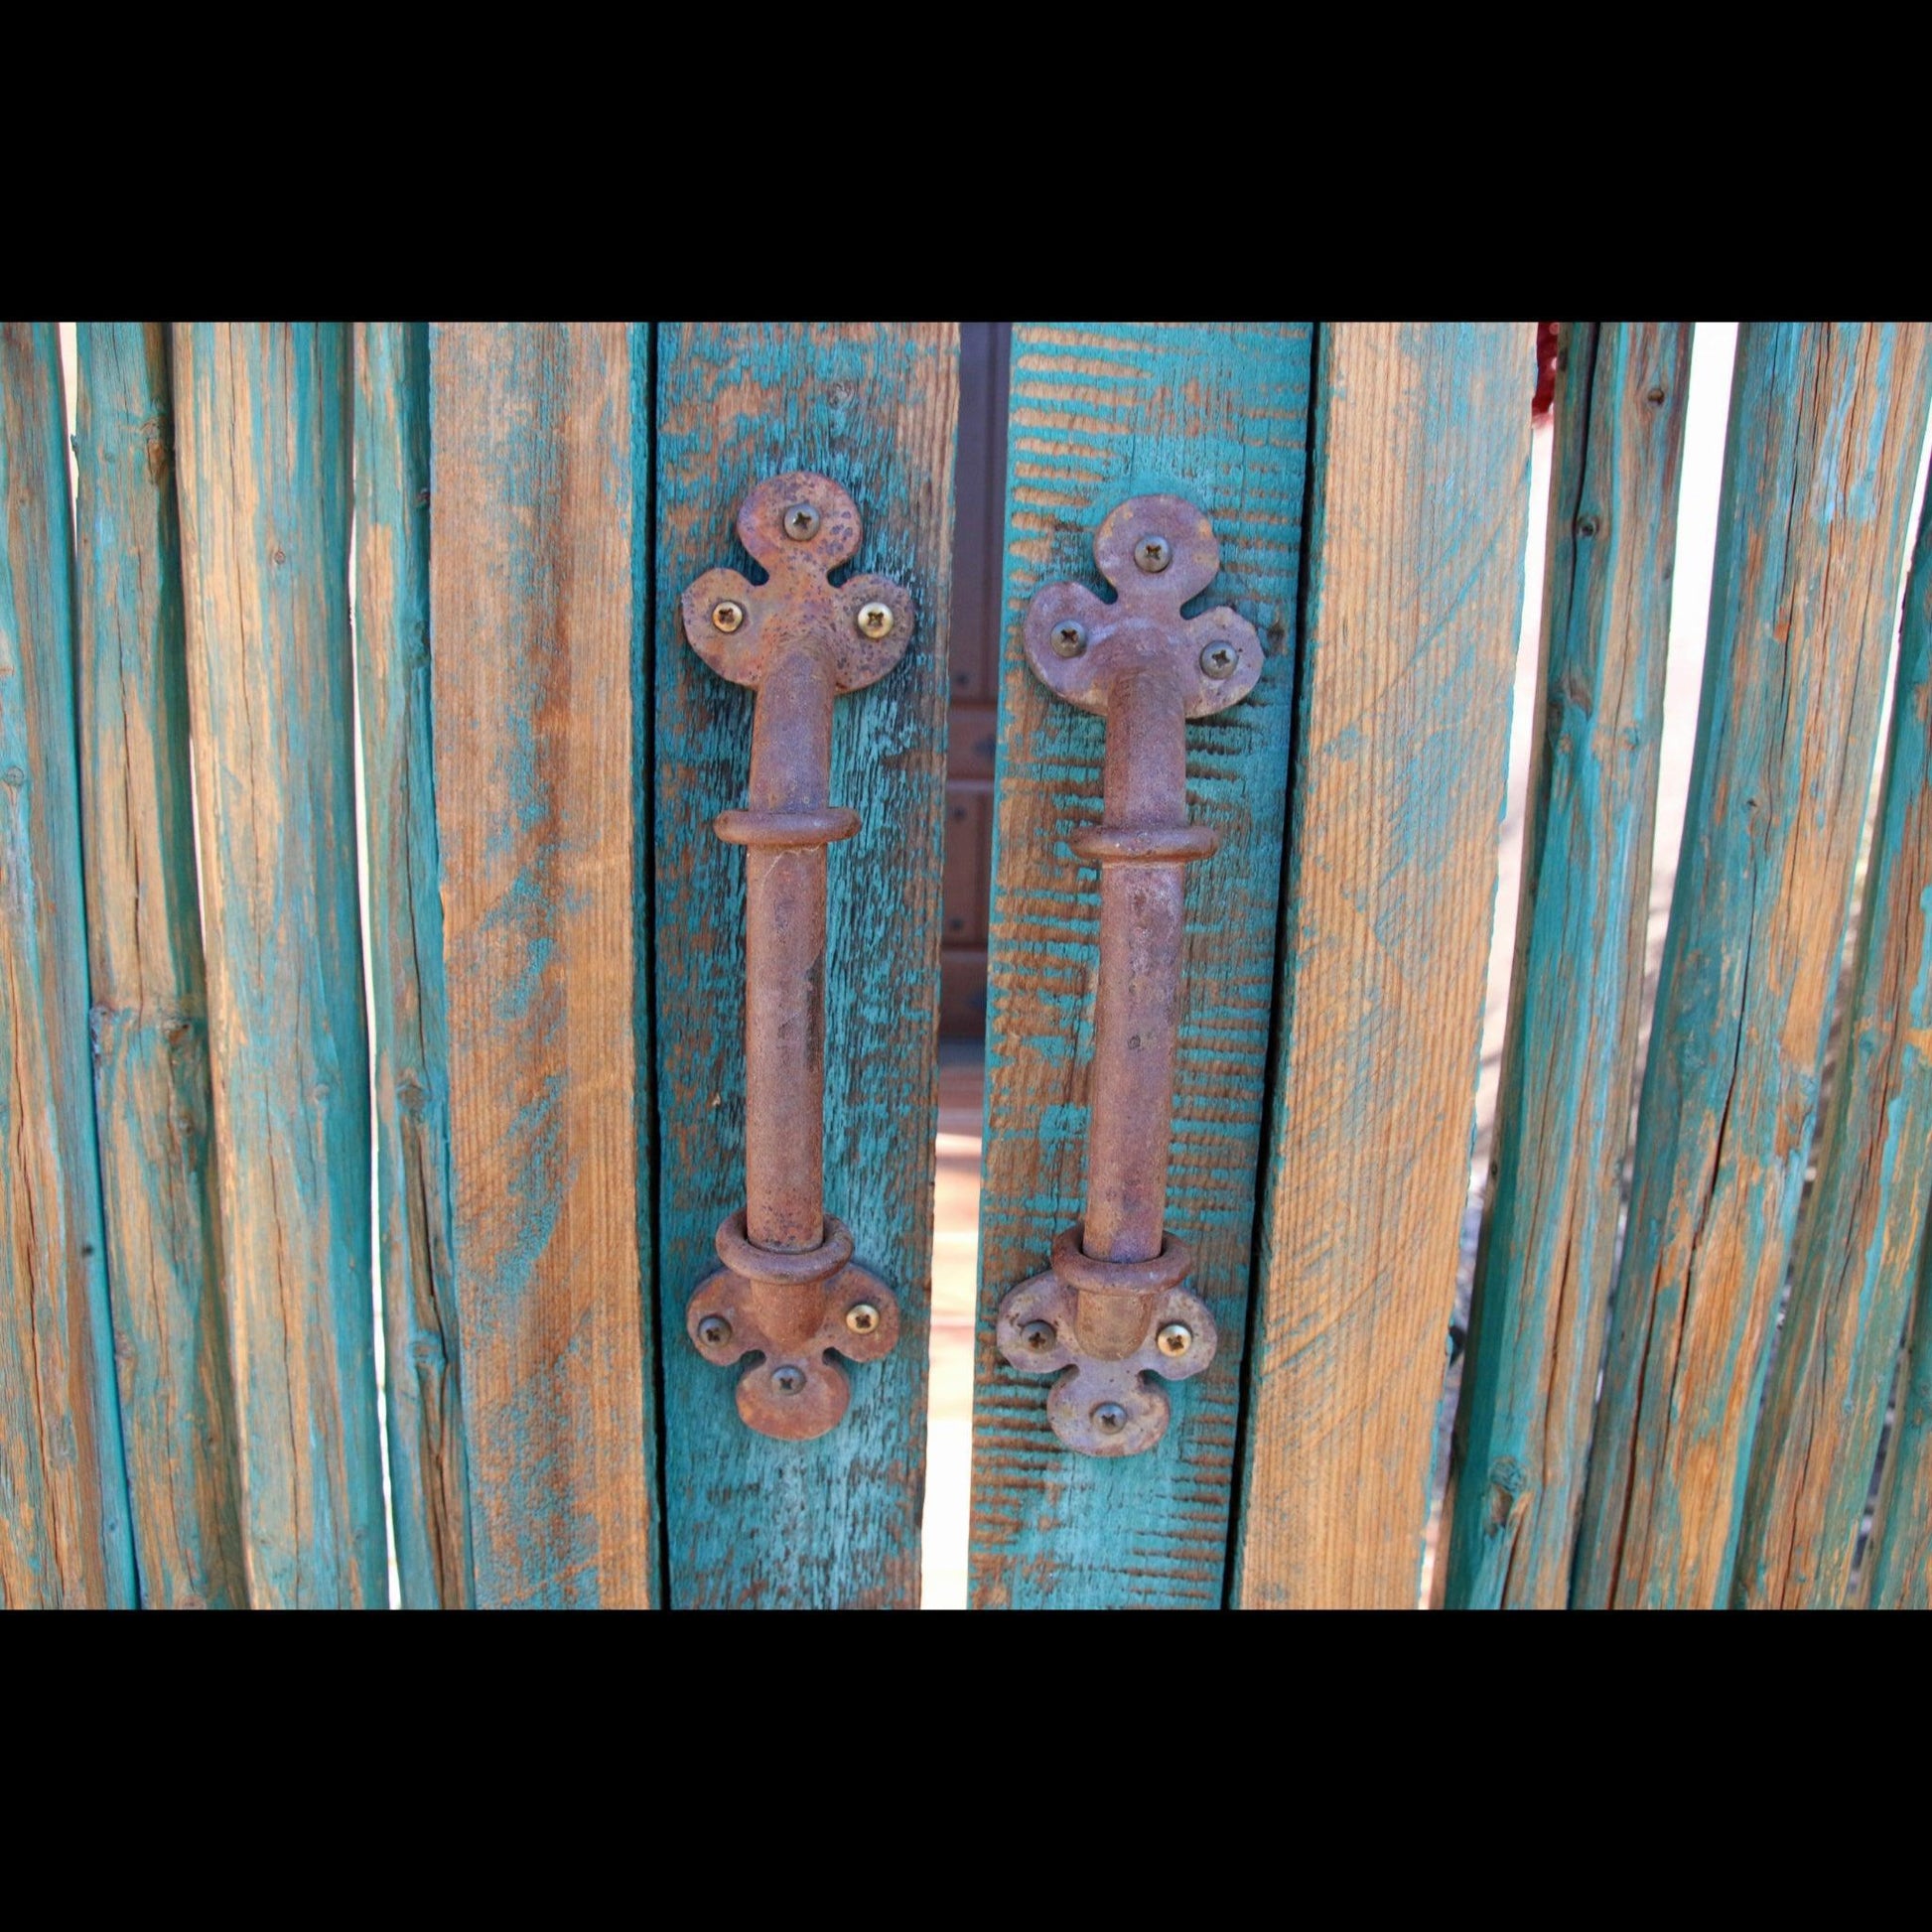 faded-green-door-with-old-handles-v-isenhower-photography - V. Isenhower Photography